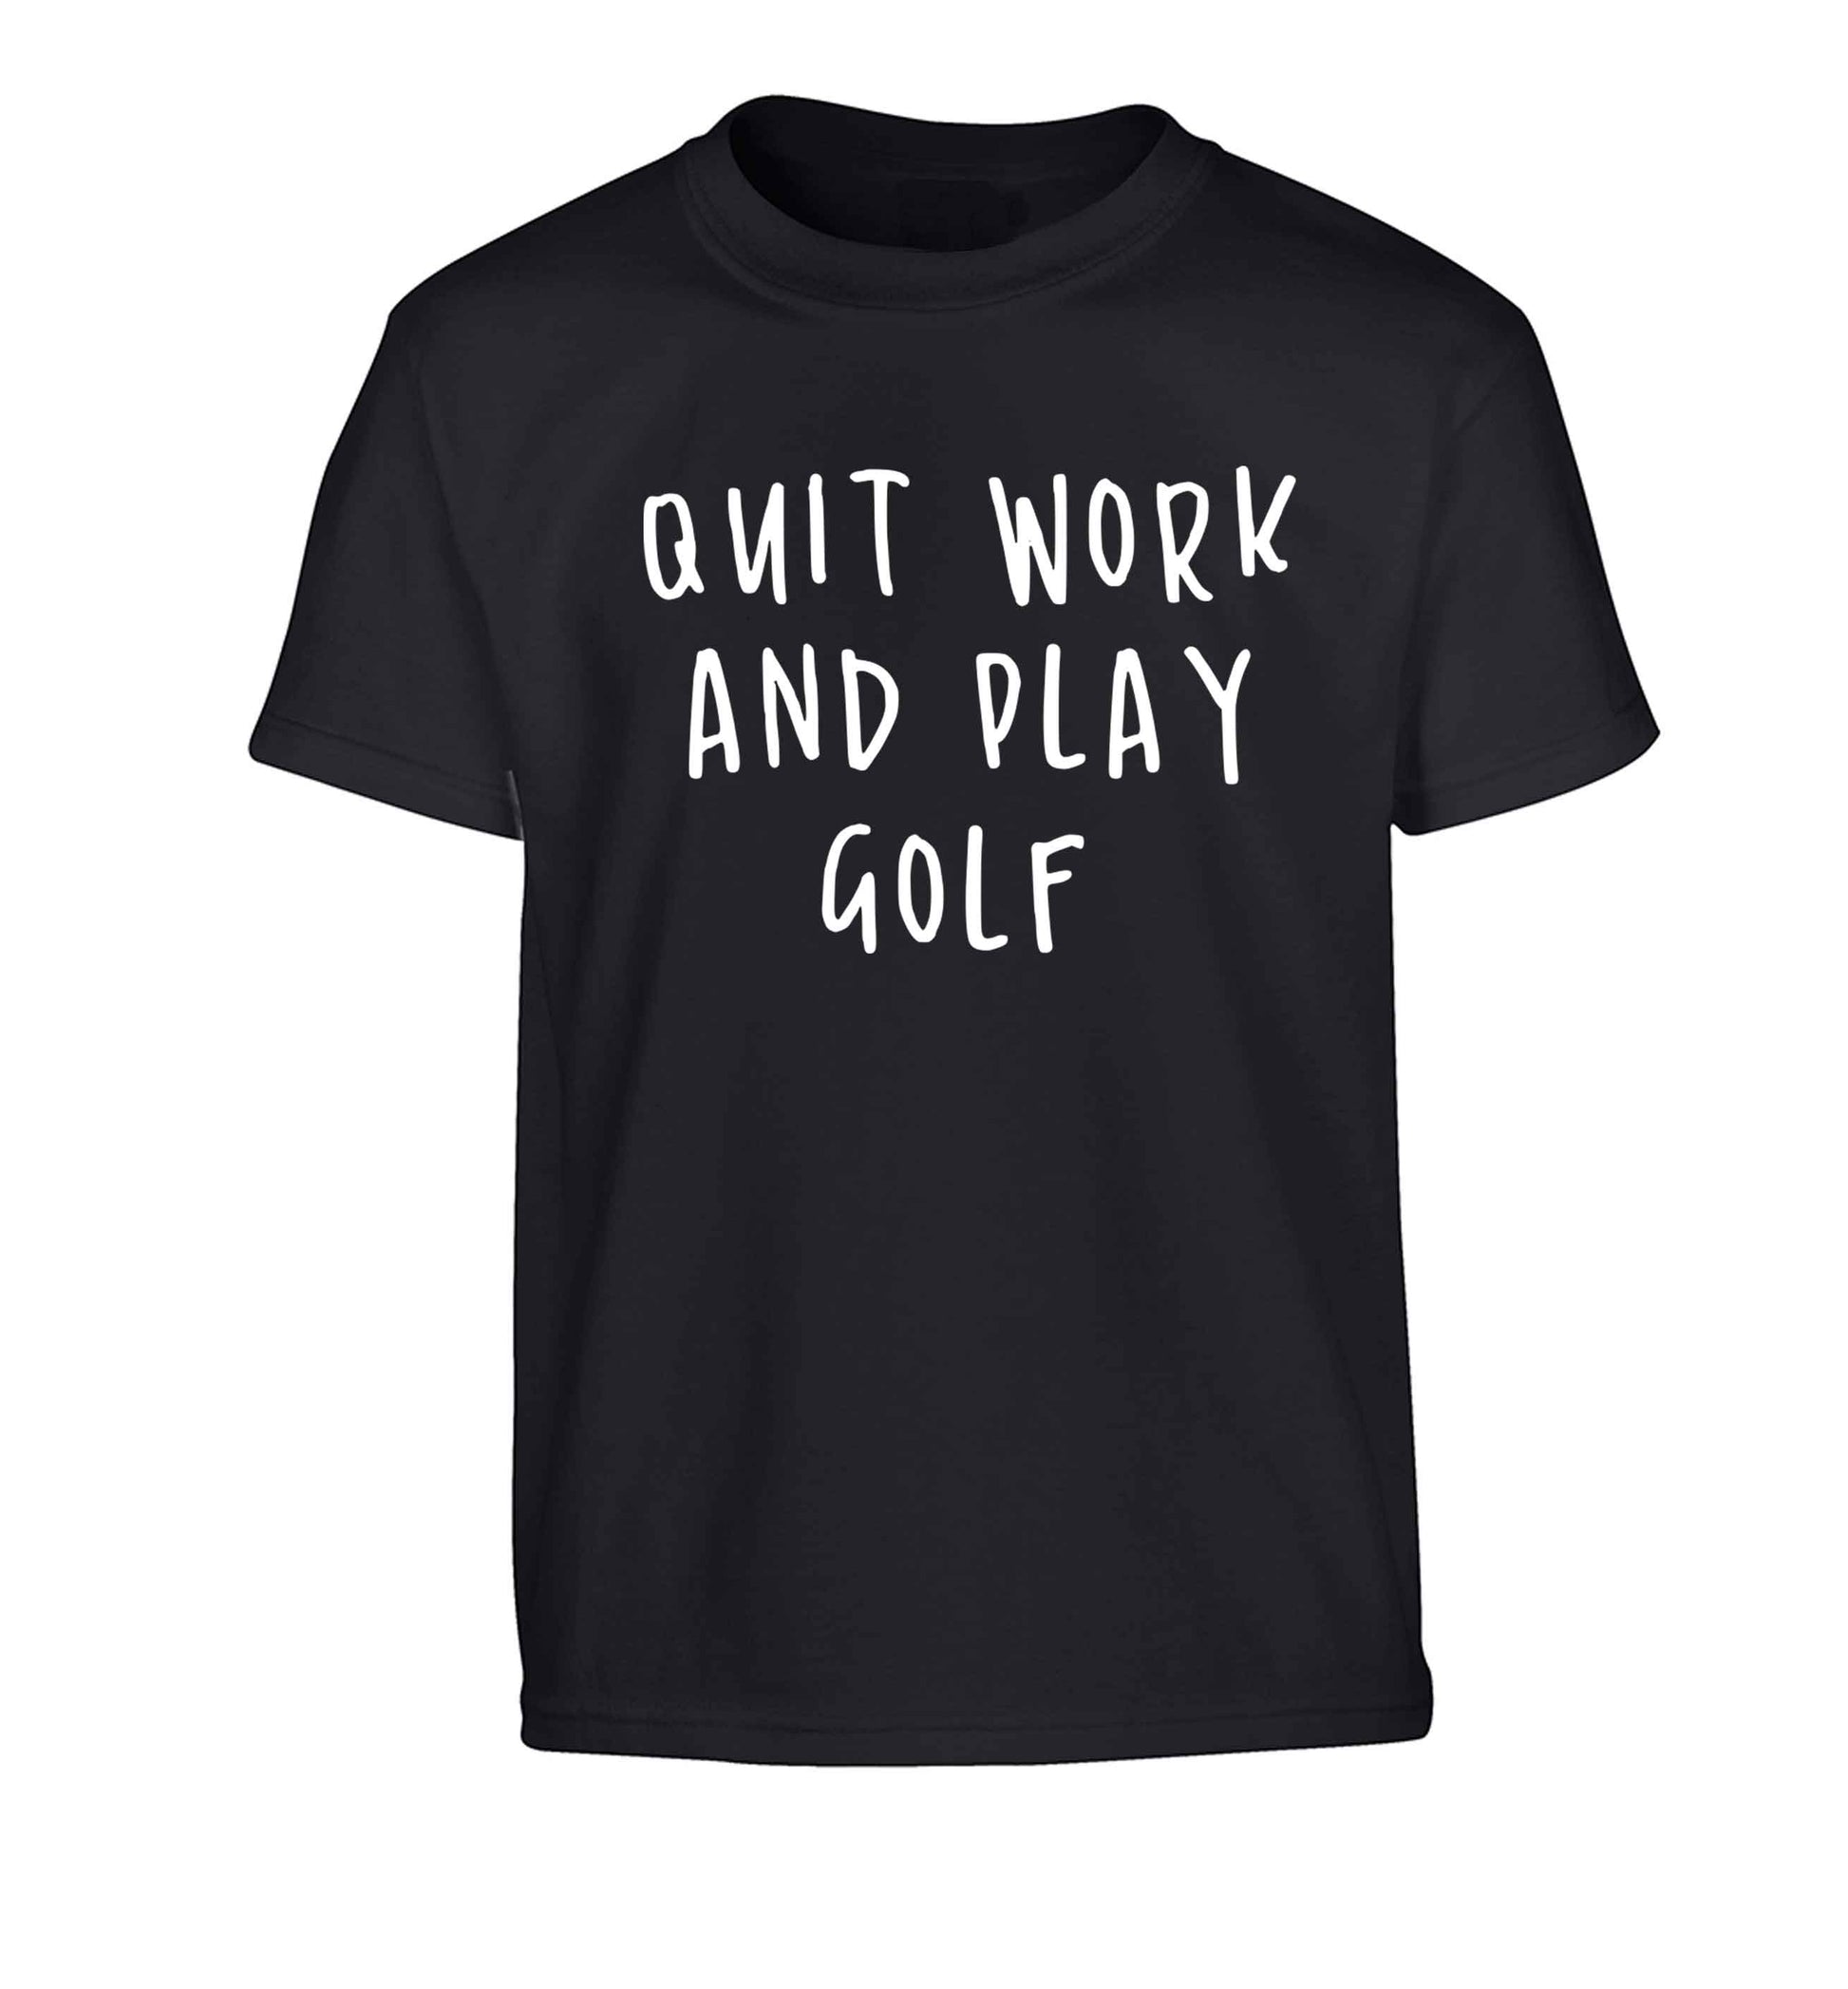 Quit work and play golf Children's black Tshirt 12-13 Years